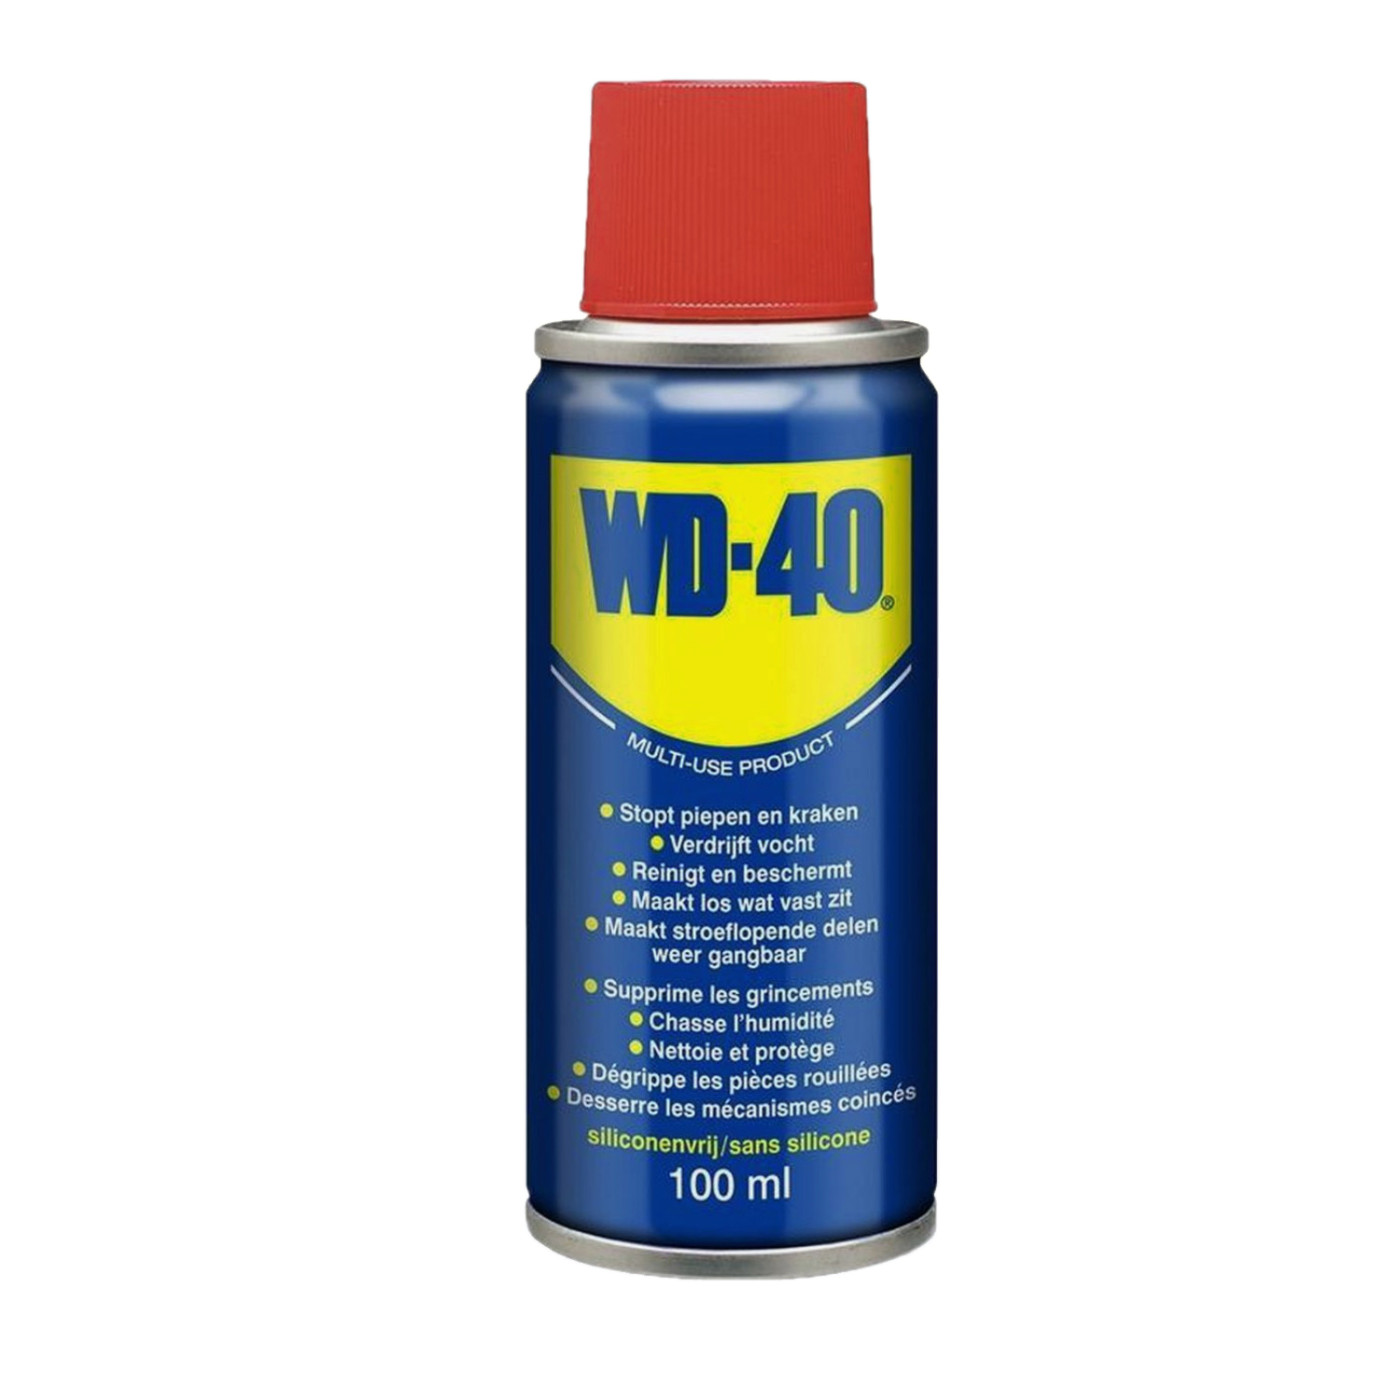 WD-40 480 ml producto multiusos en lata - Wood, Tools & Deco